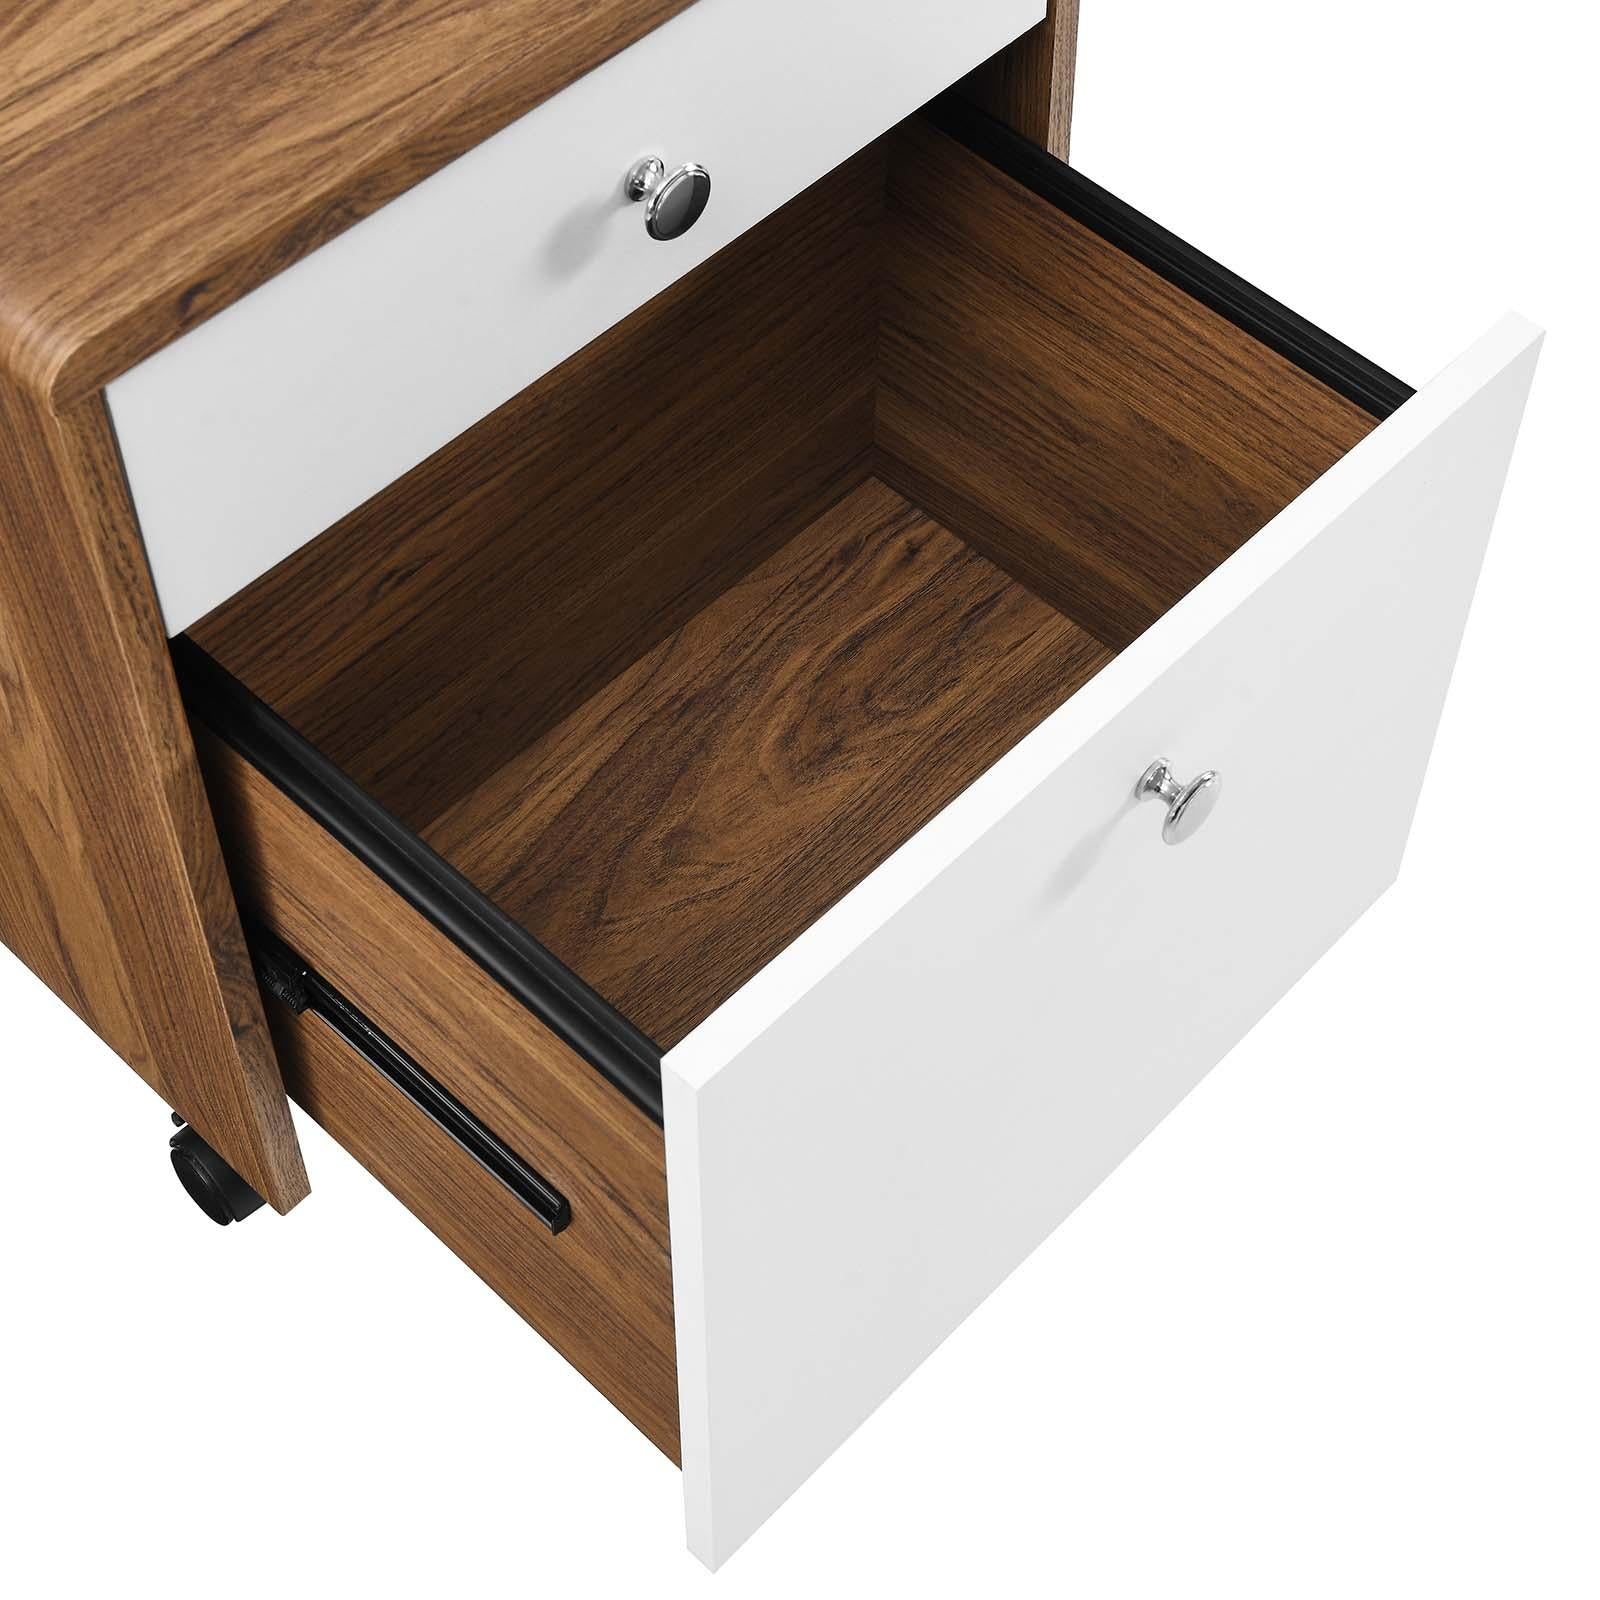 Modway Furniture Modern Transmit Wood Desk and File Cabinet Set - EEI-5822